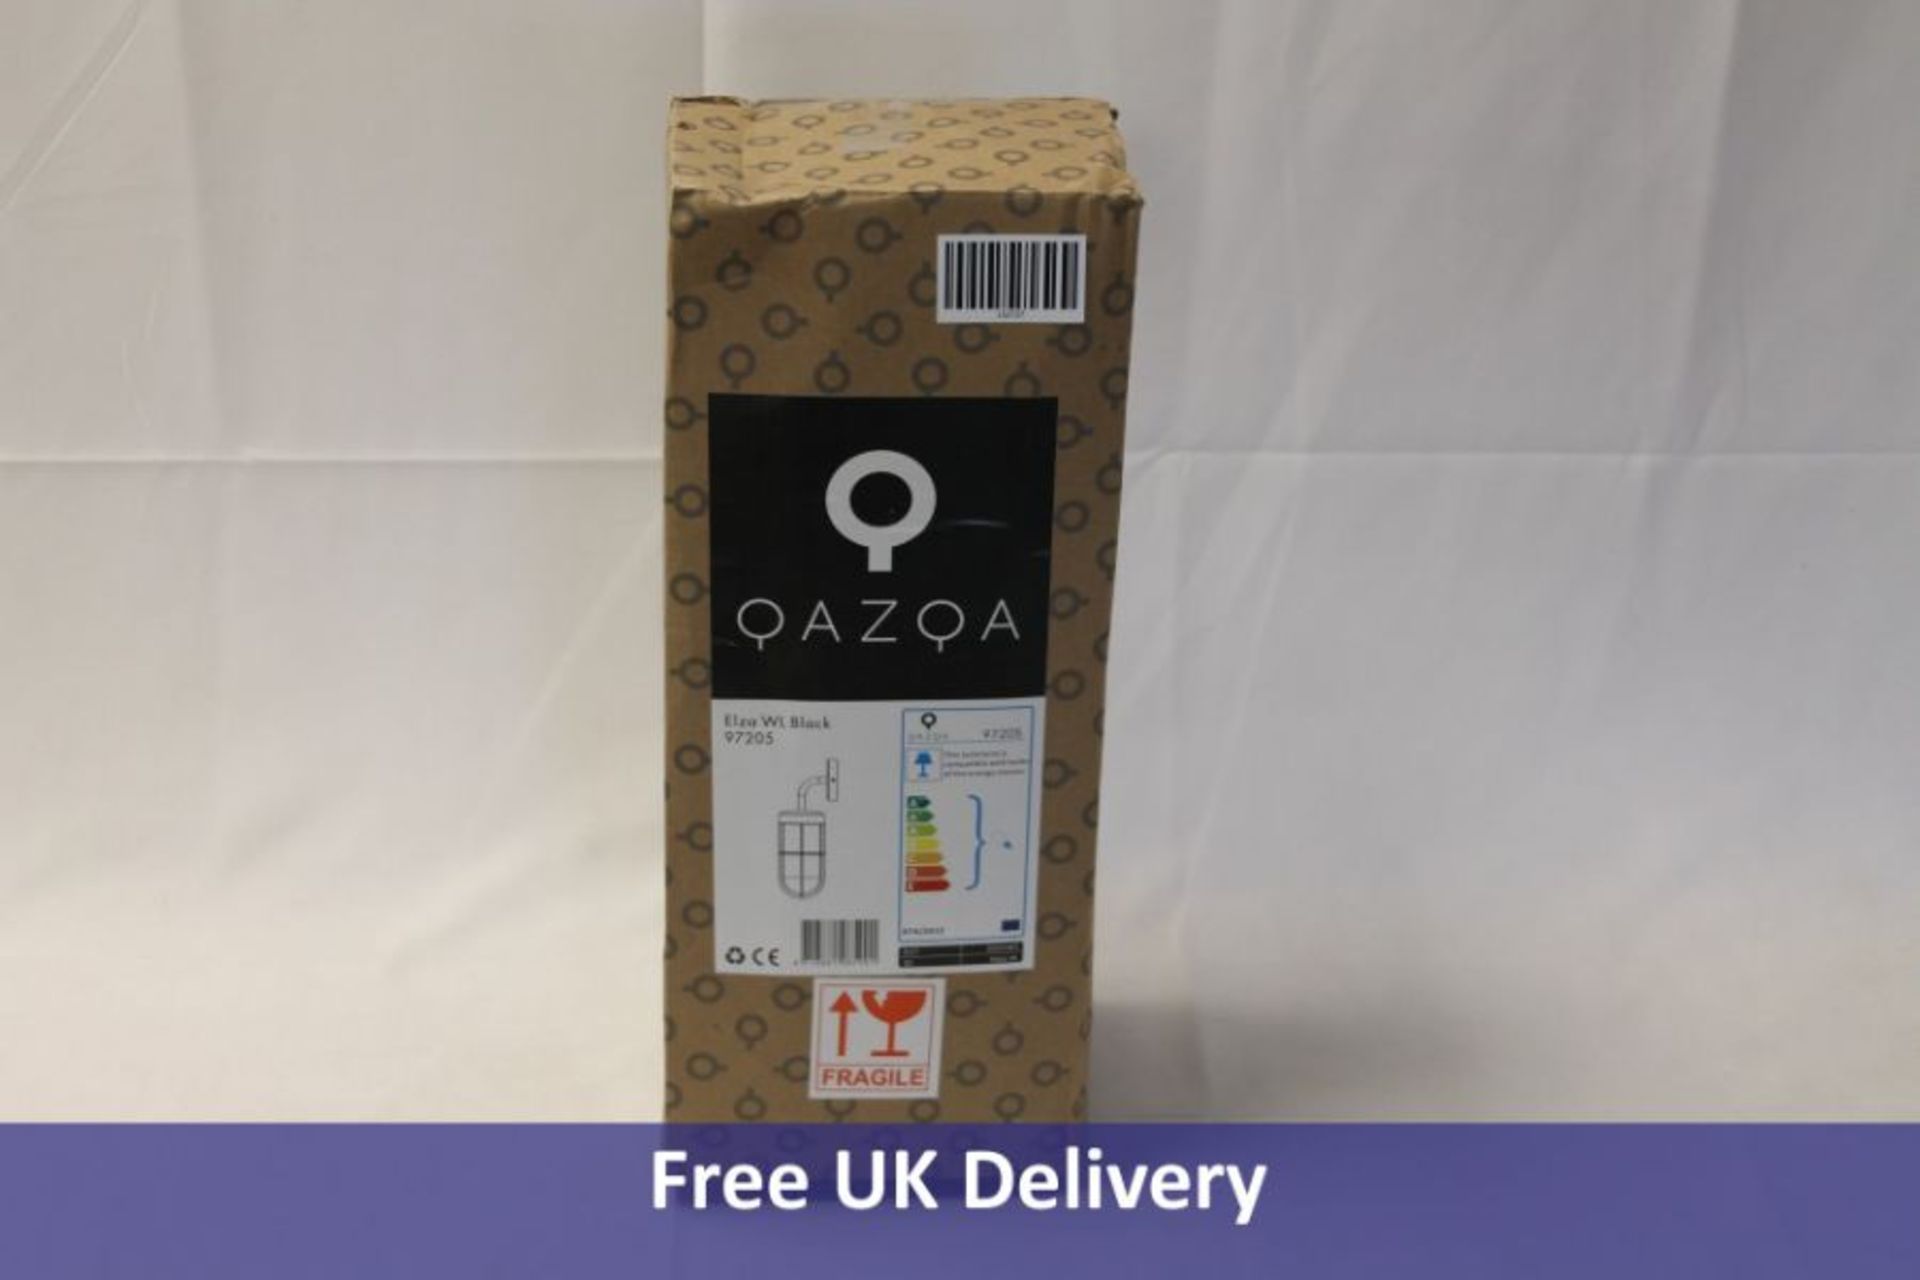 Three Qazqa listing products to include 1x Elza WL Black Wall Lamp, Model 97205, Socket E27, Max 25W - Image 2 of 3